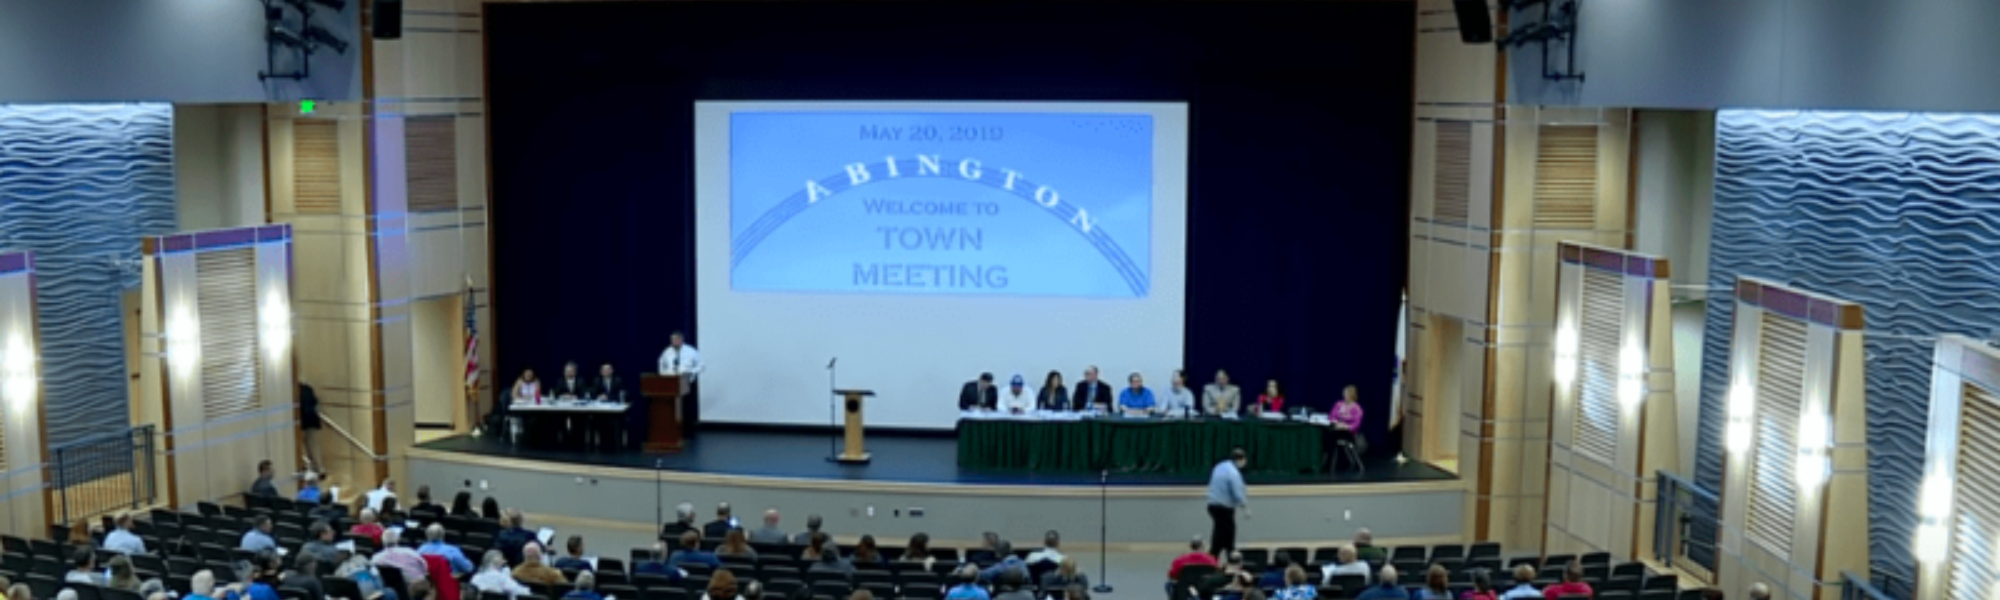 Abington Town Meeting